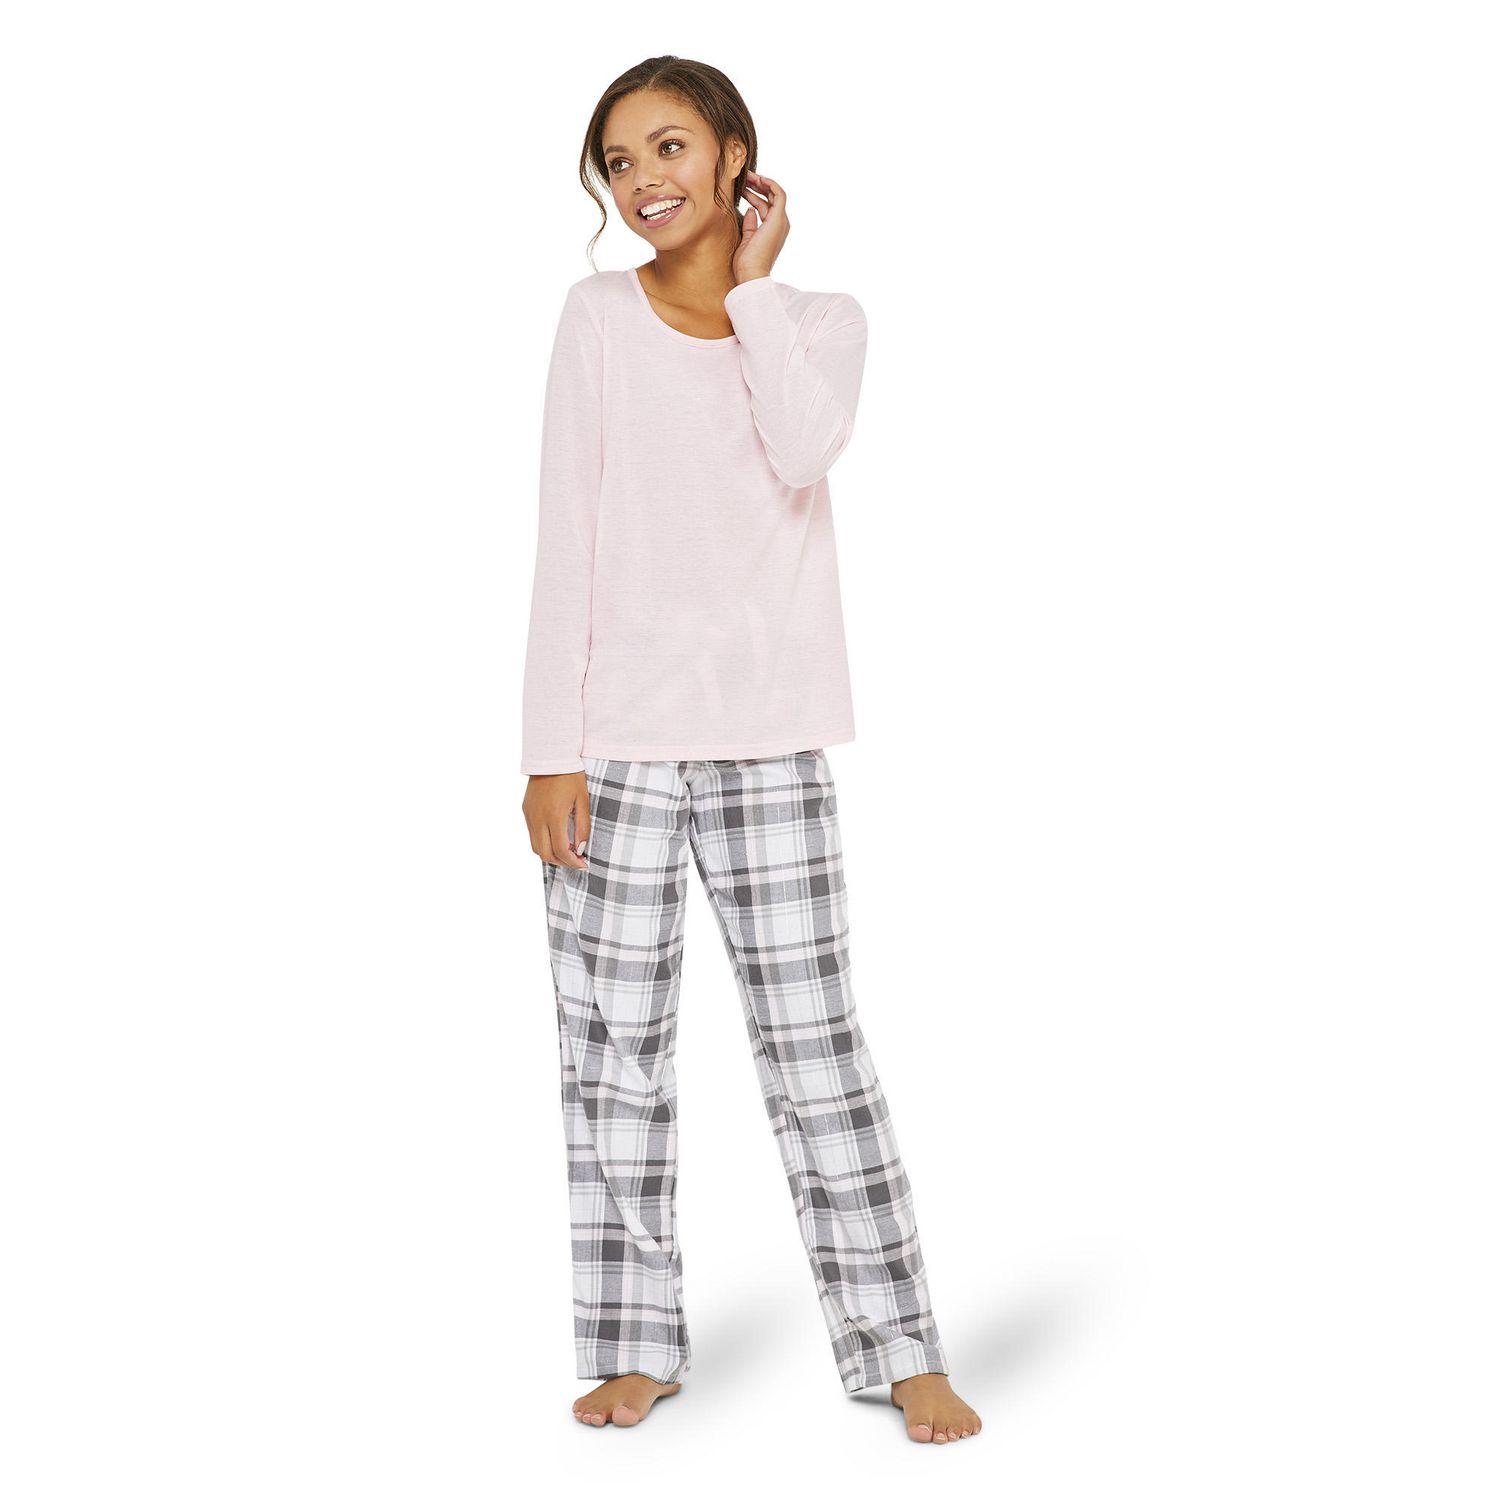 SIORO Flannel Pyjamas for Women Cotton Plaid Pyjama Sets Ladies Long Sleeve Sleepwear 